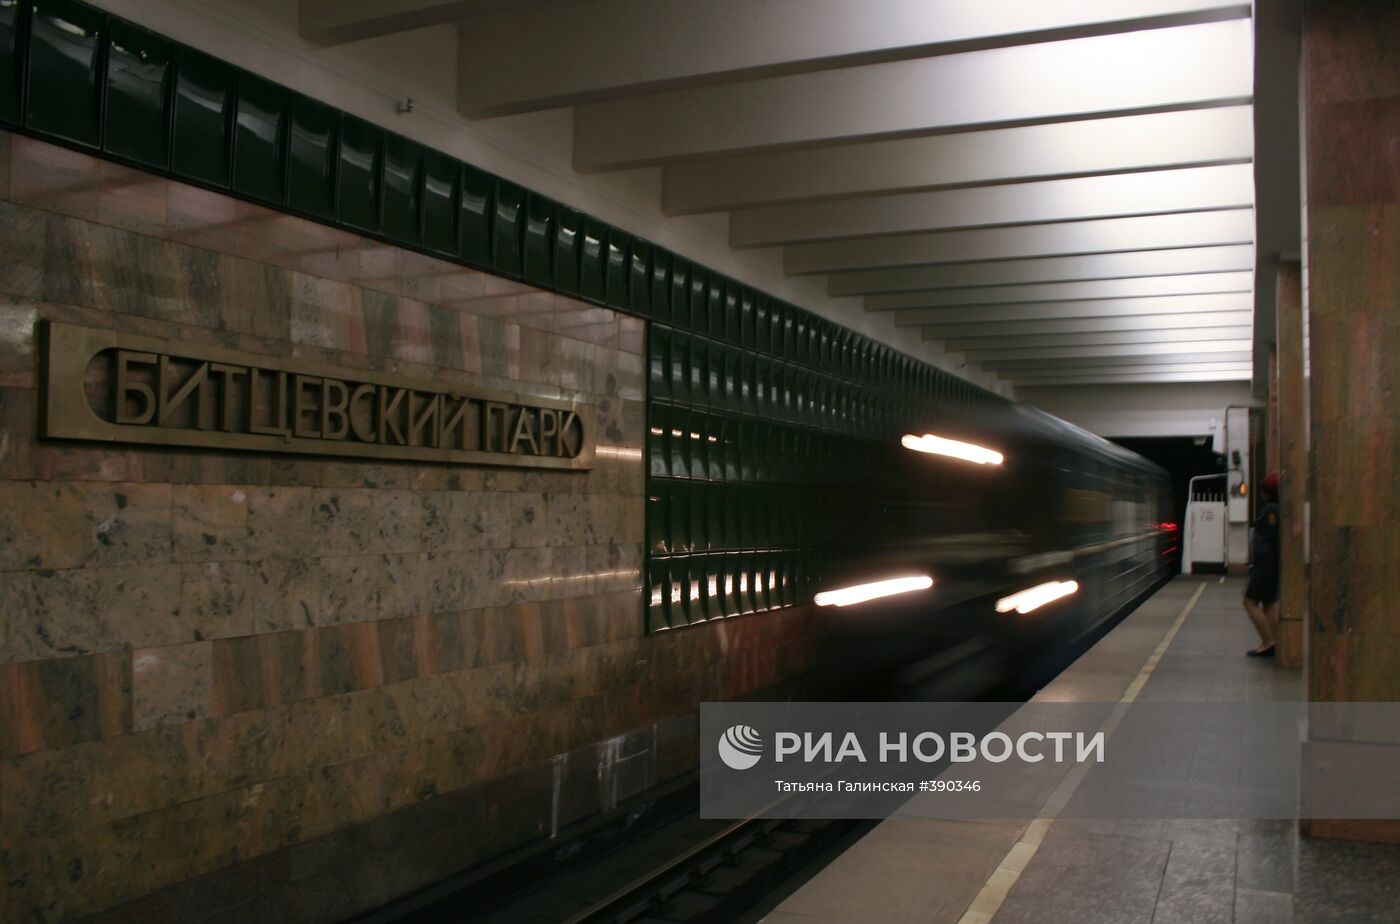 Станция московского метрополитена "Битцевский парк"